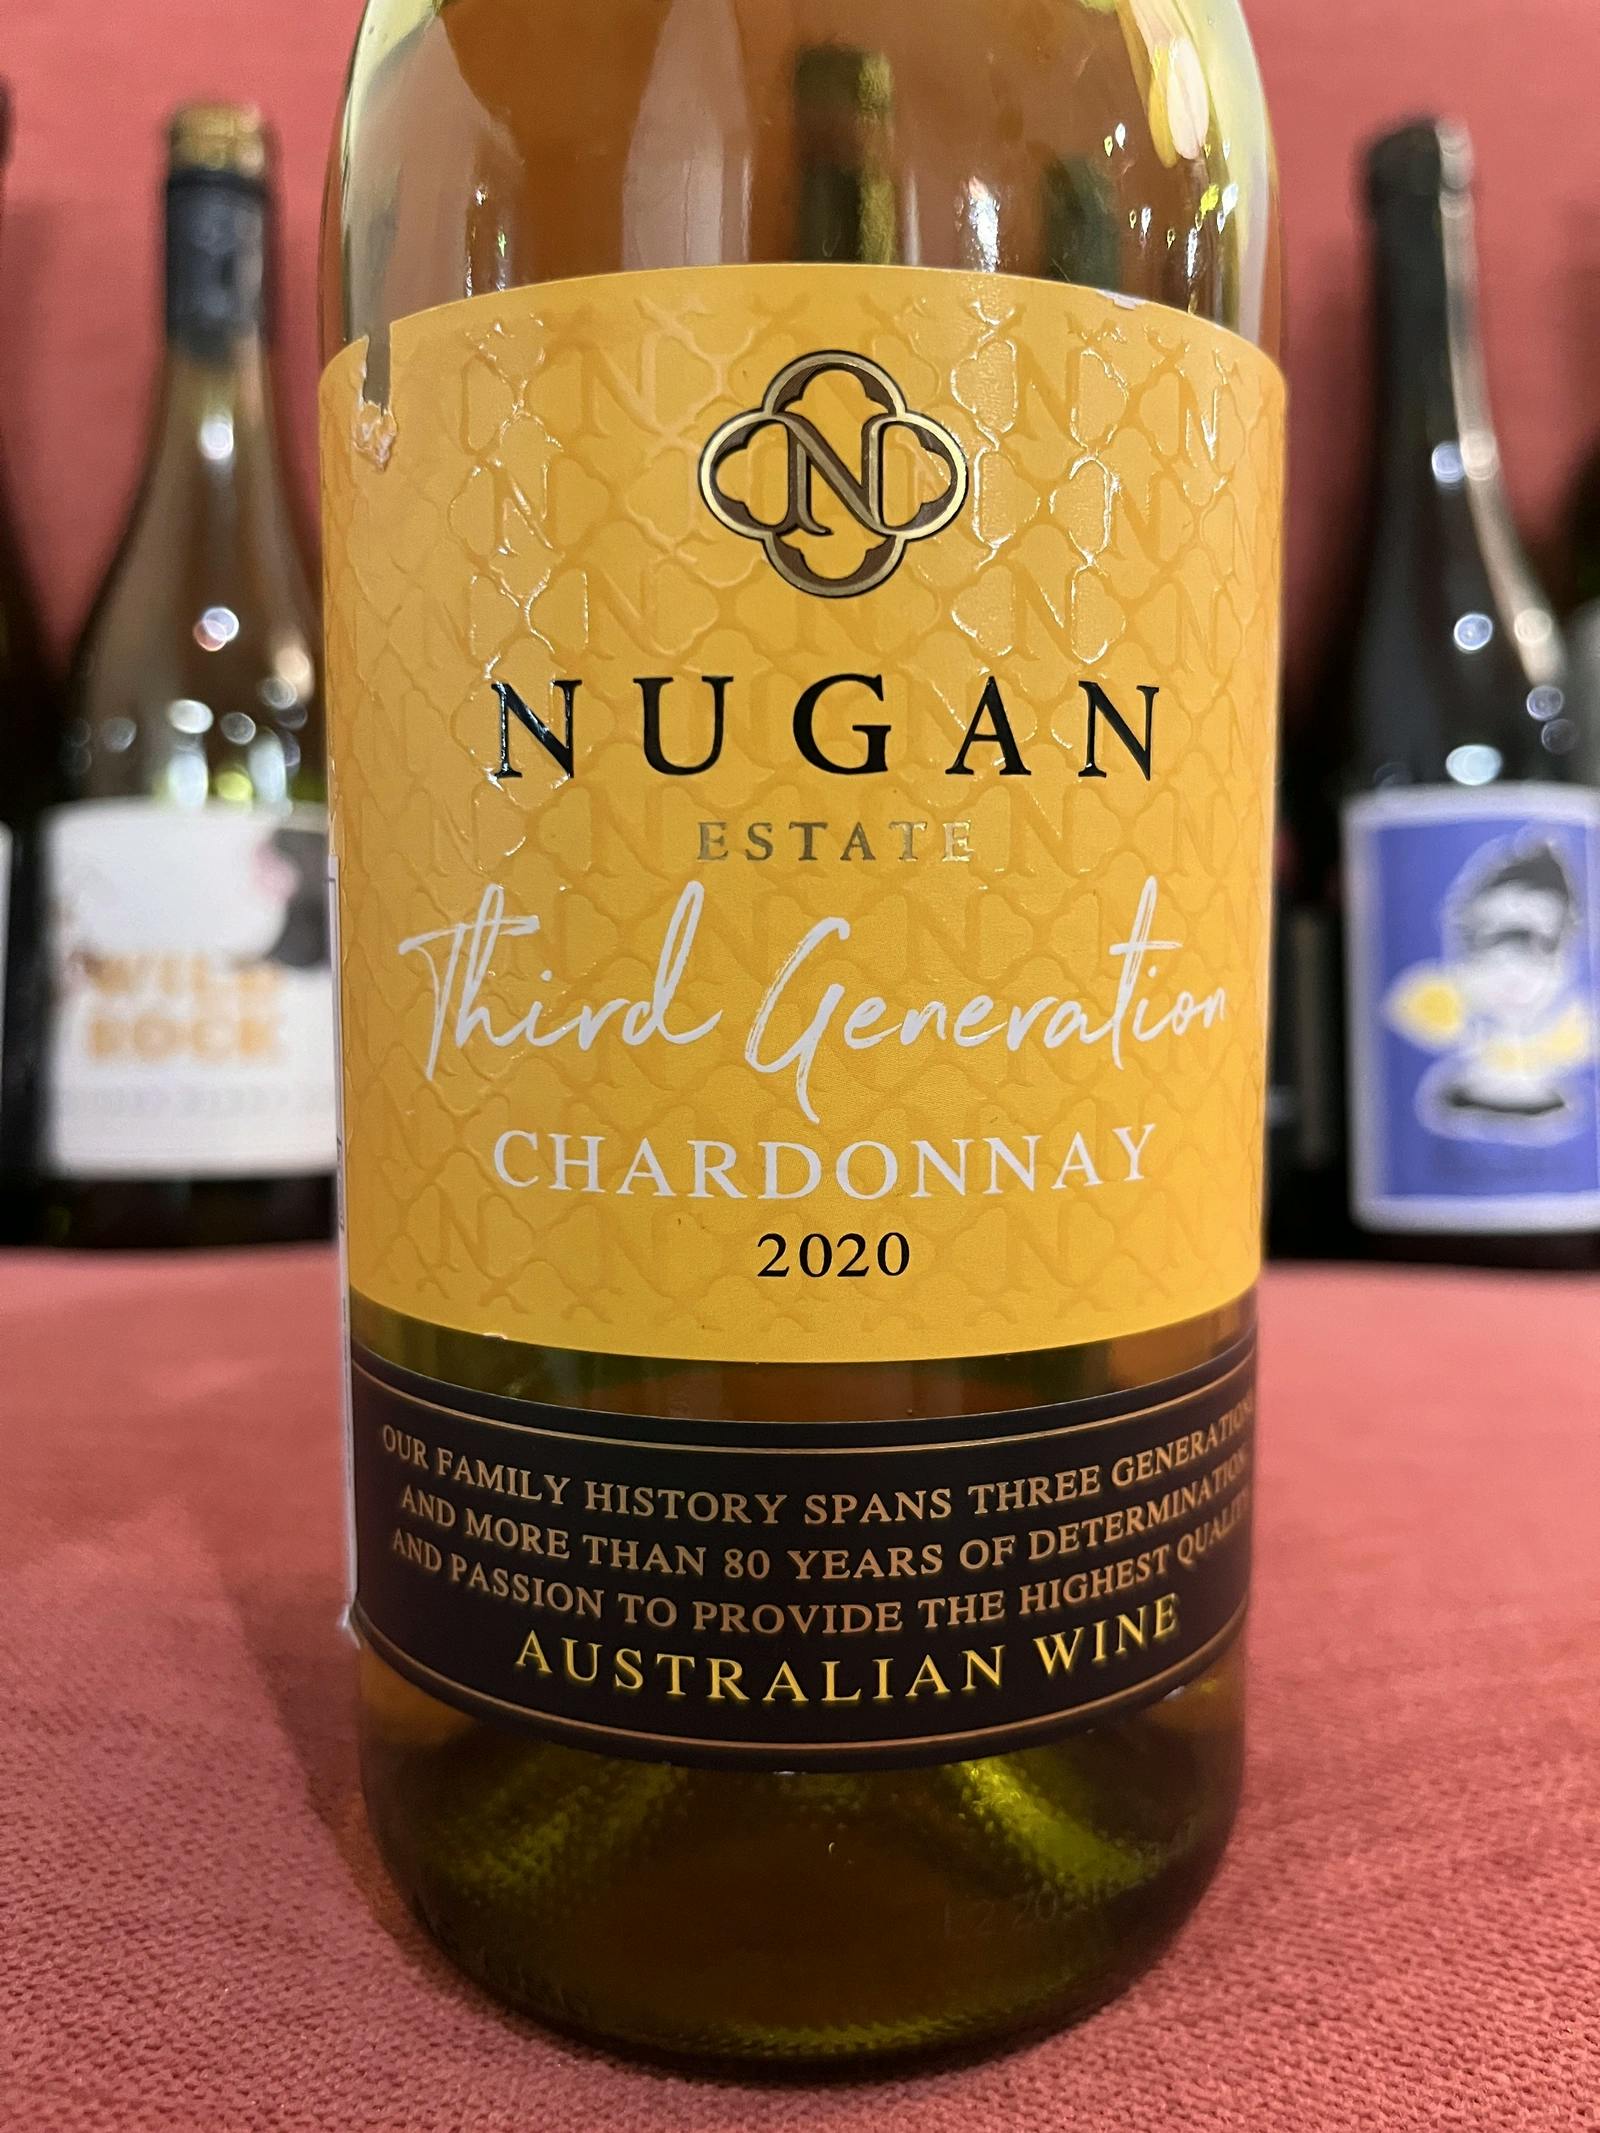 Nugan Estate Third Generation Chardonnay 2020